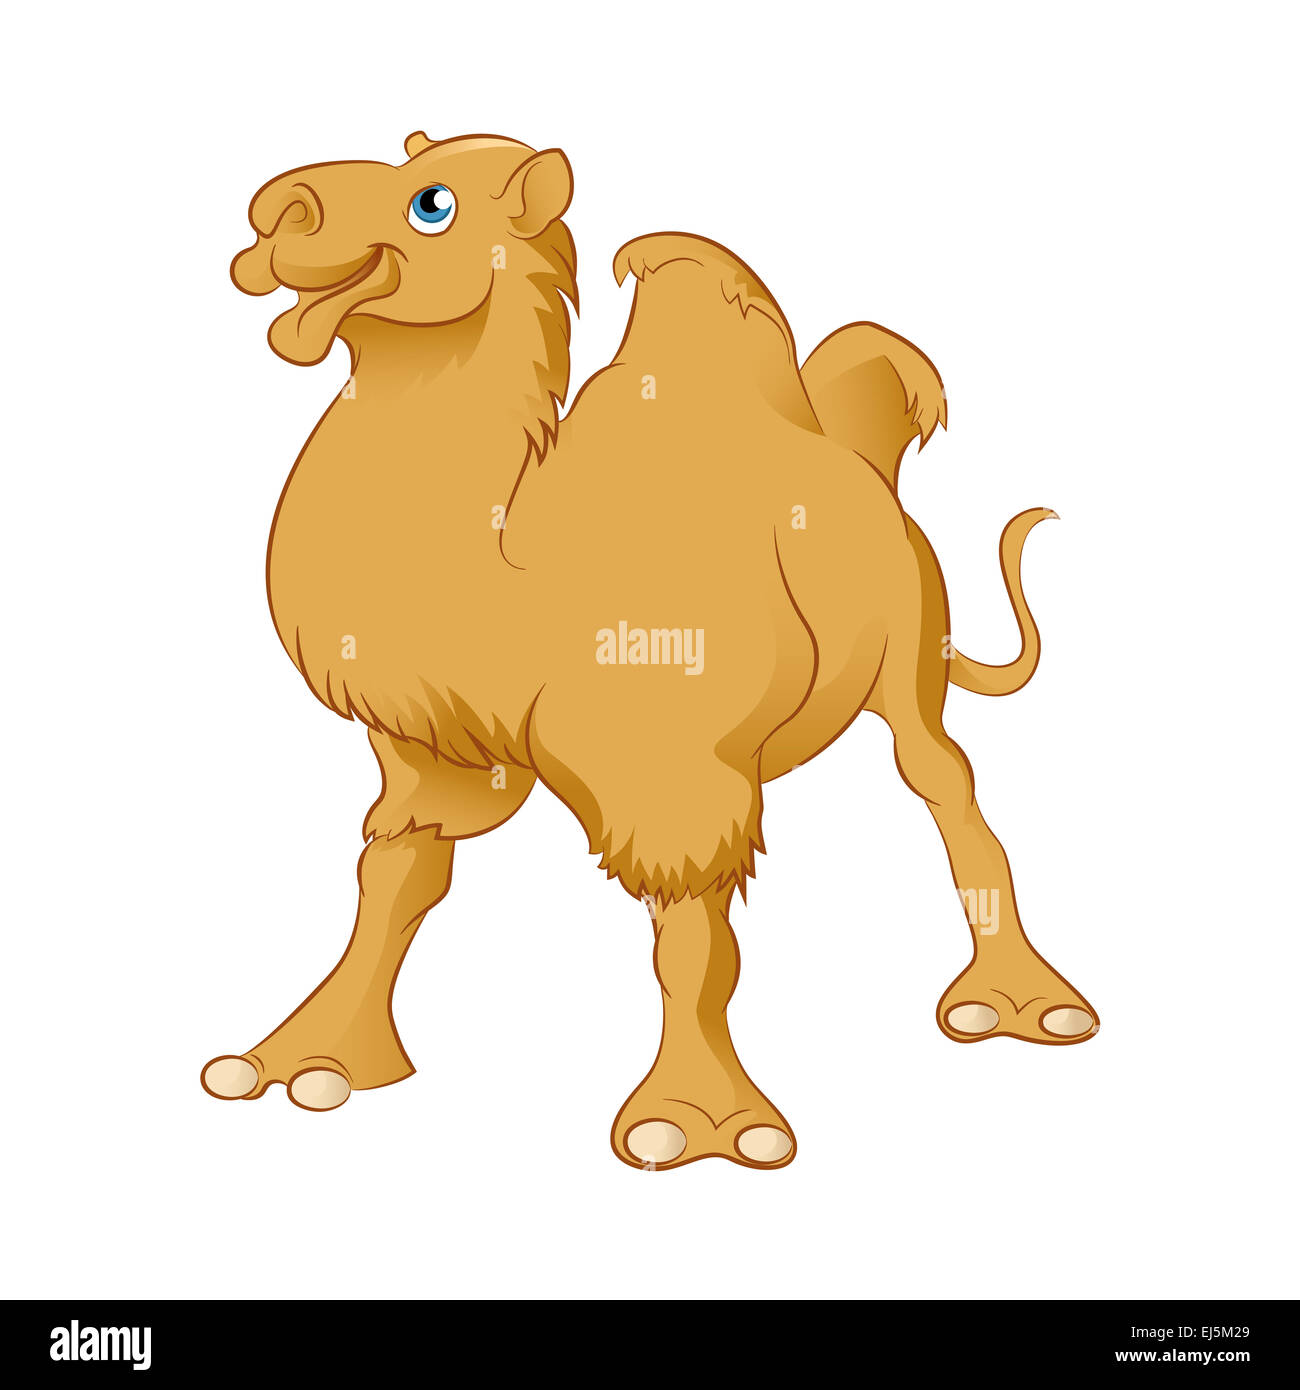 Vector image of an yellow Cartoon Camel Stock Photo